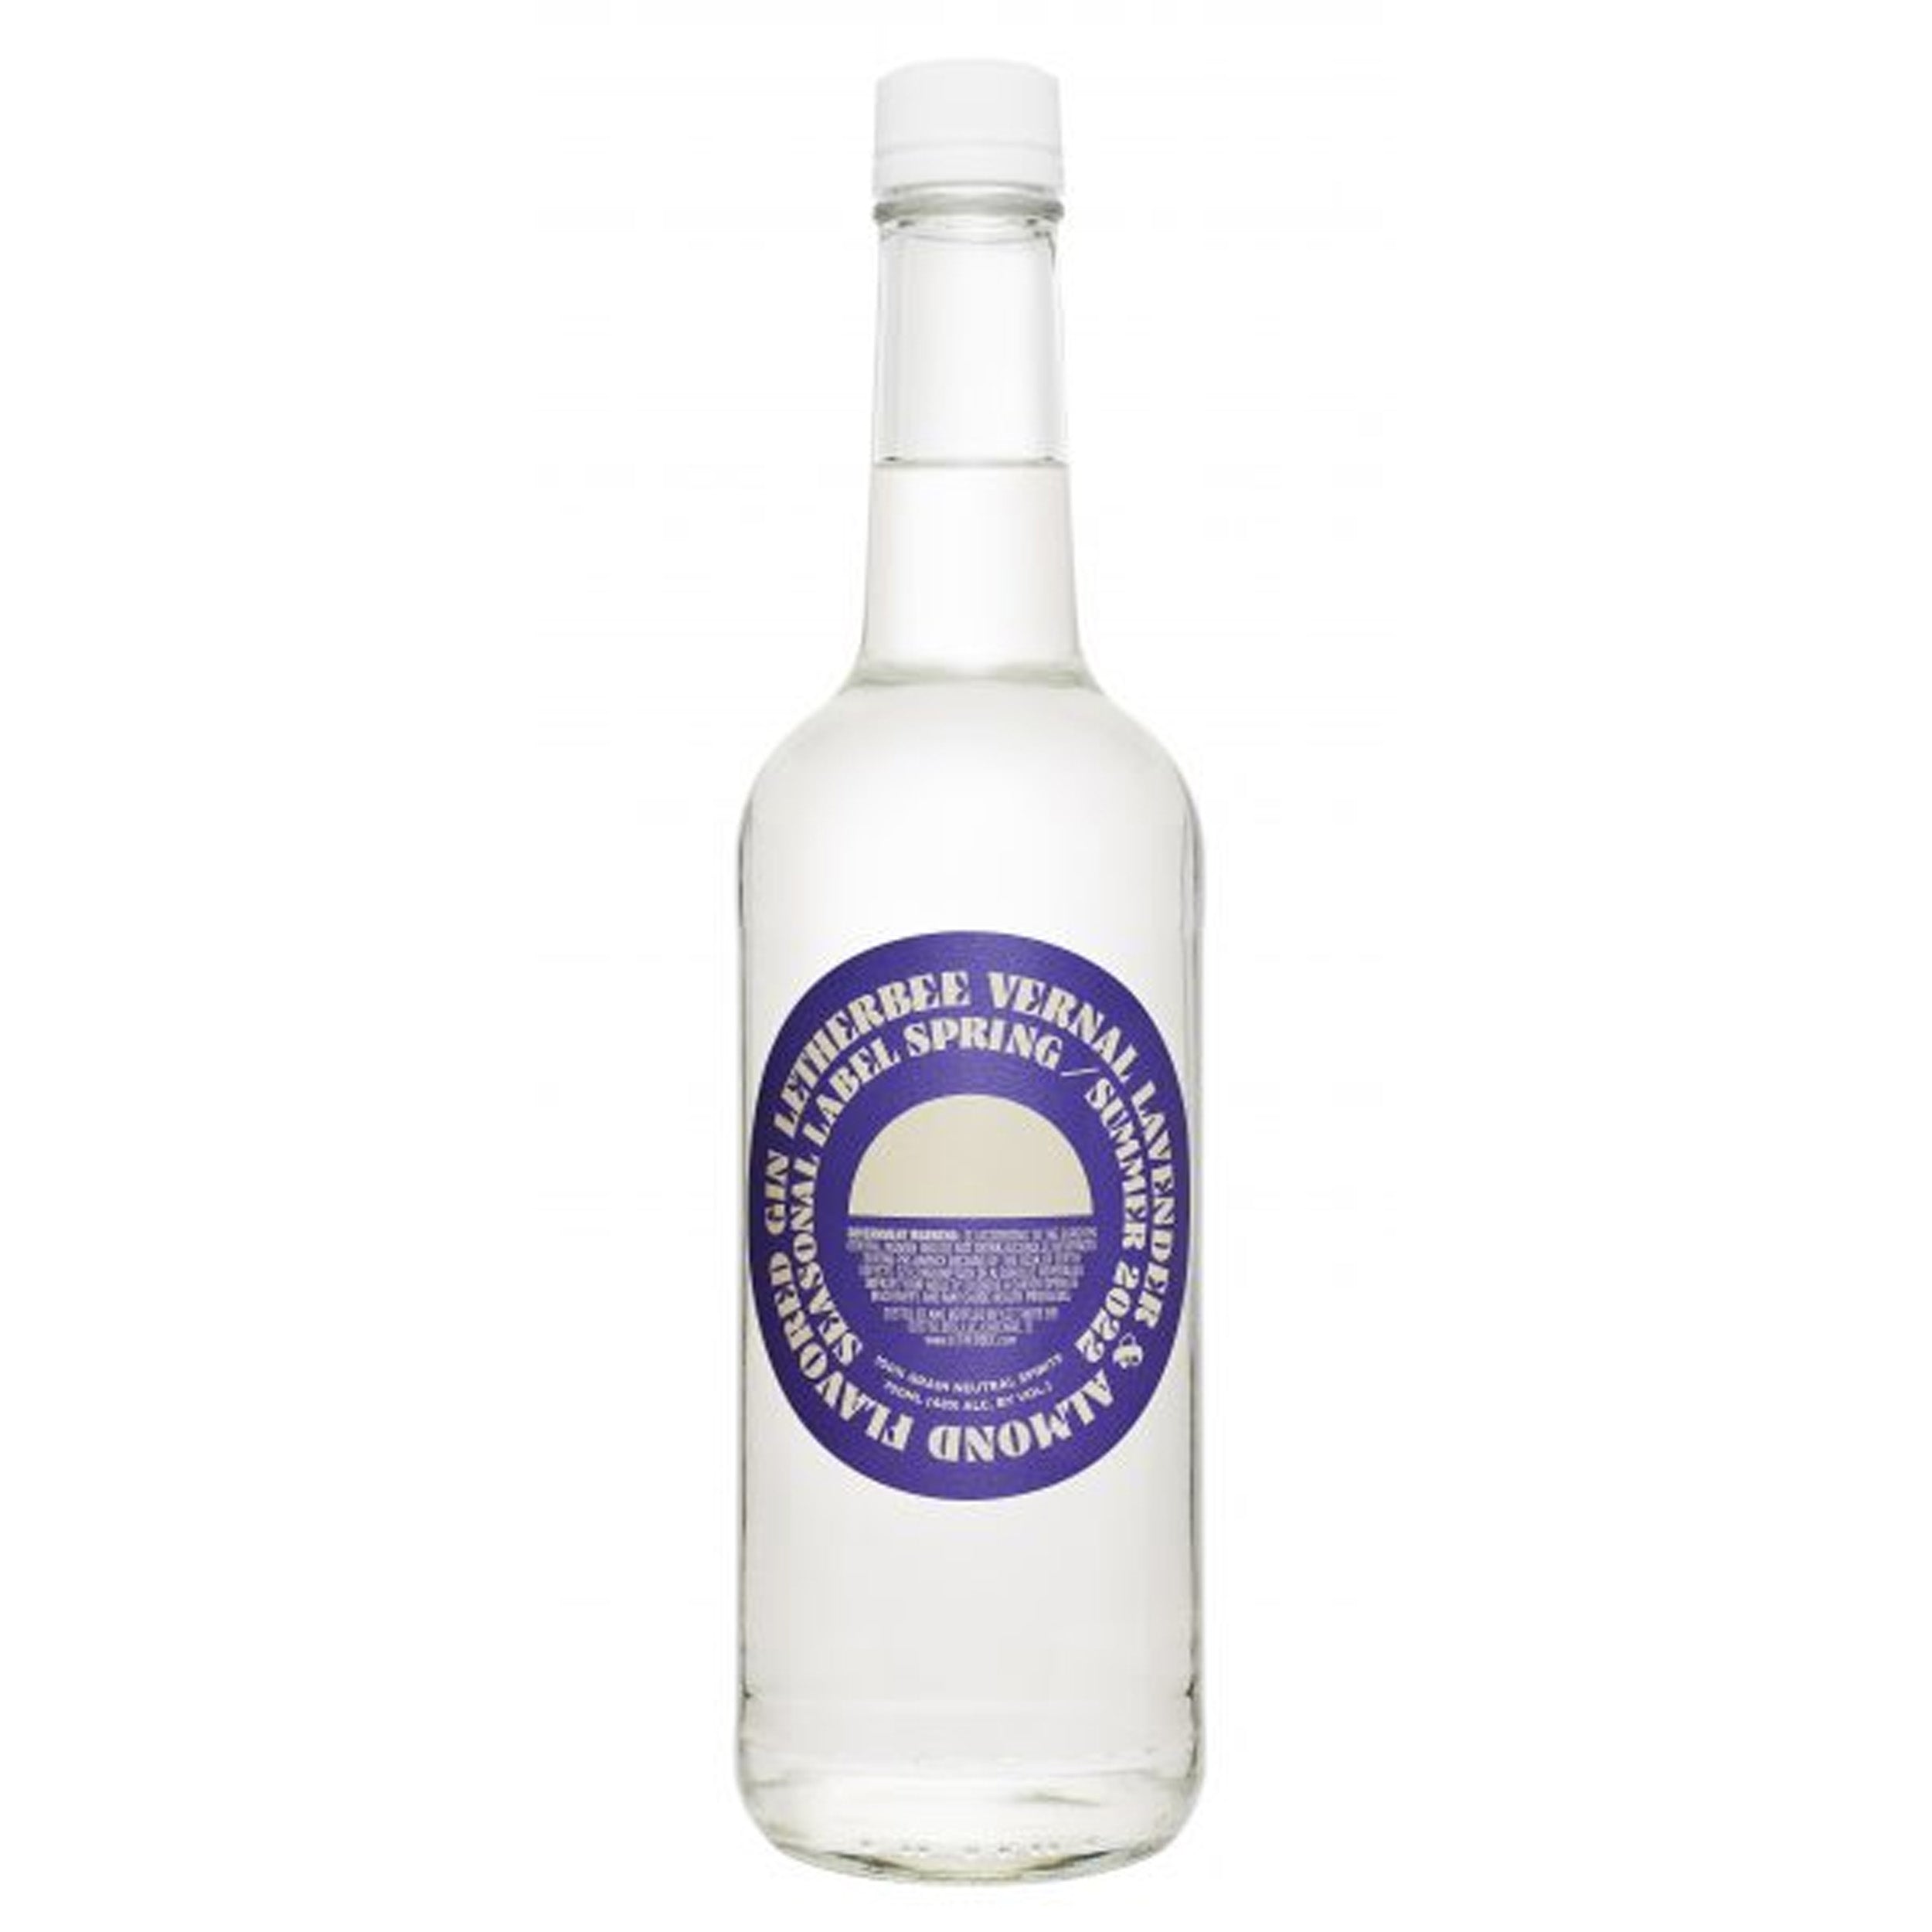 Lavender & Flavoured Liquor Vernal Distillers Gin – Chips Letherbee Almond